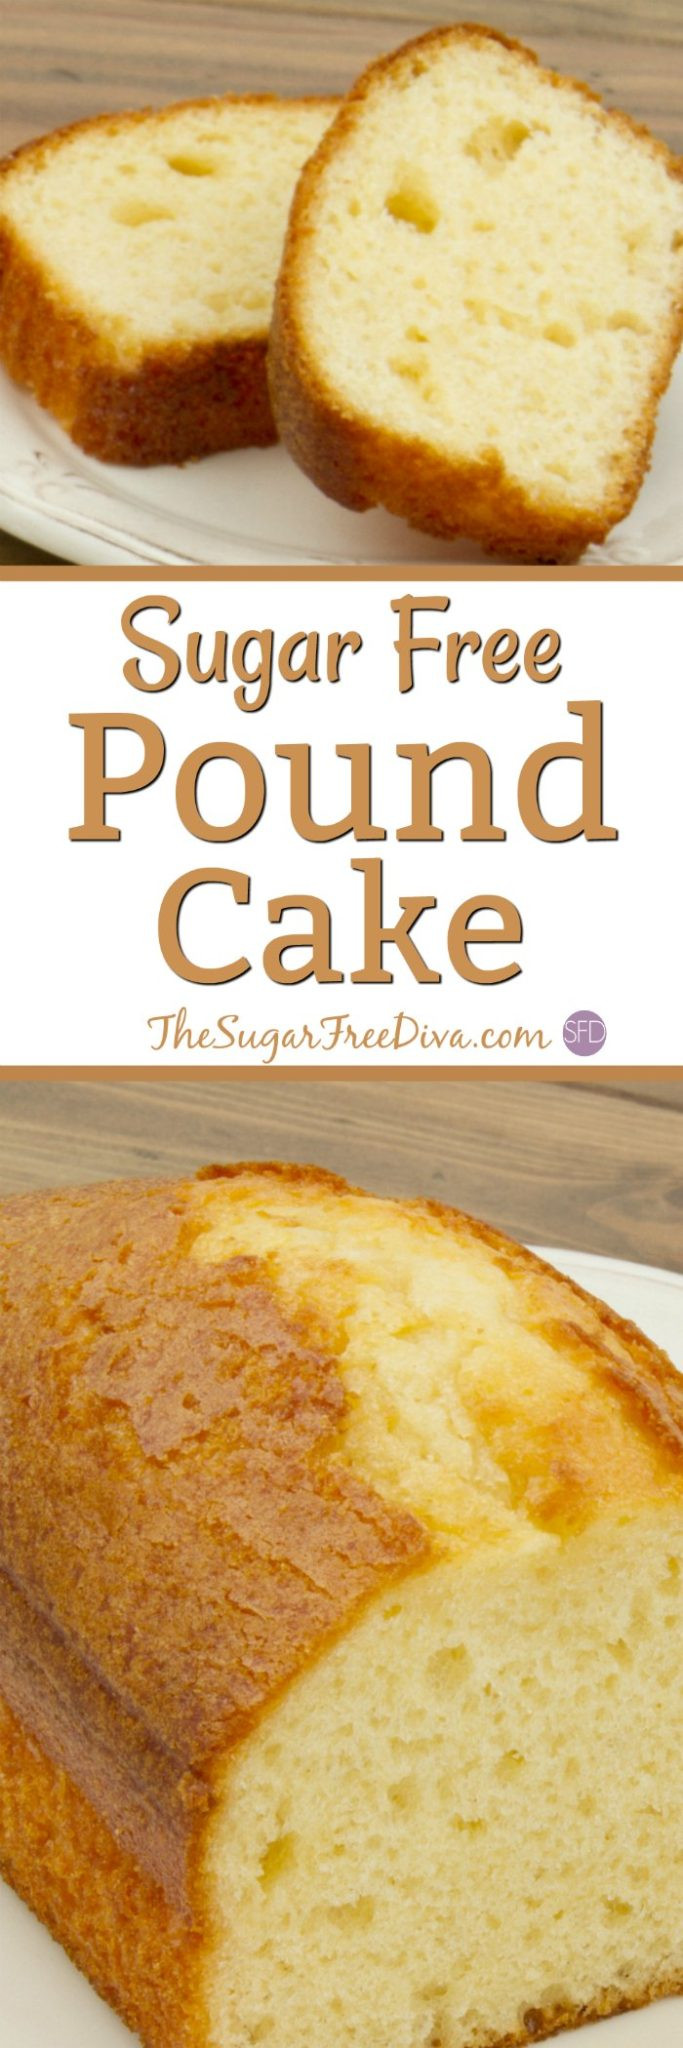 Diabetic Pound Cake Recipe
 Check out this recipe for How to Make Sugar Free Pound Cake